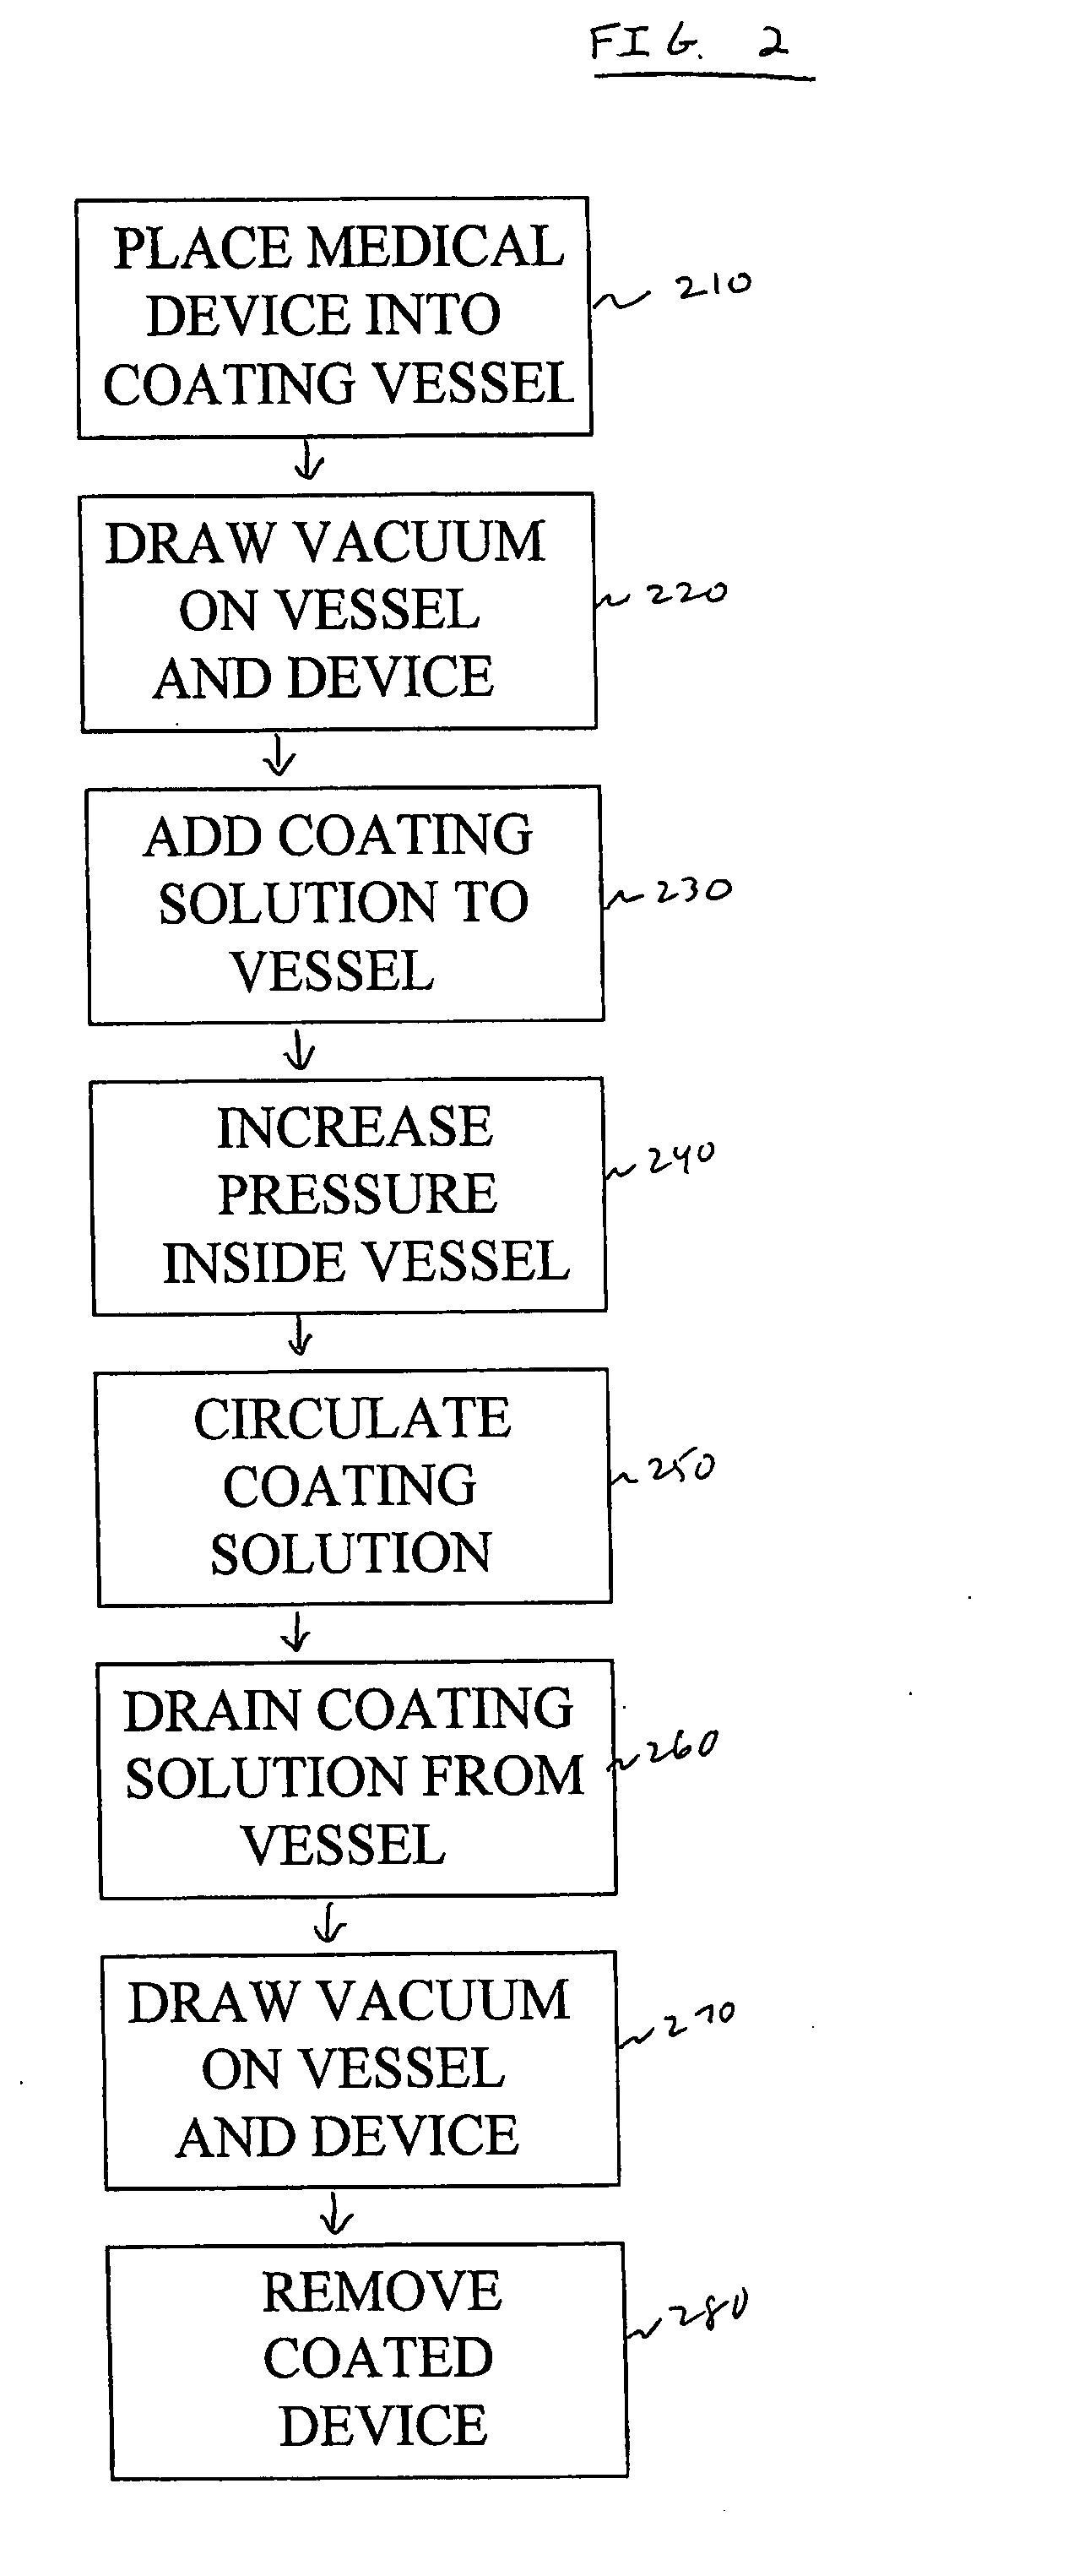 Pressurized dip coating system